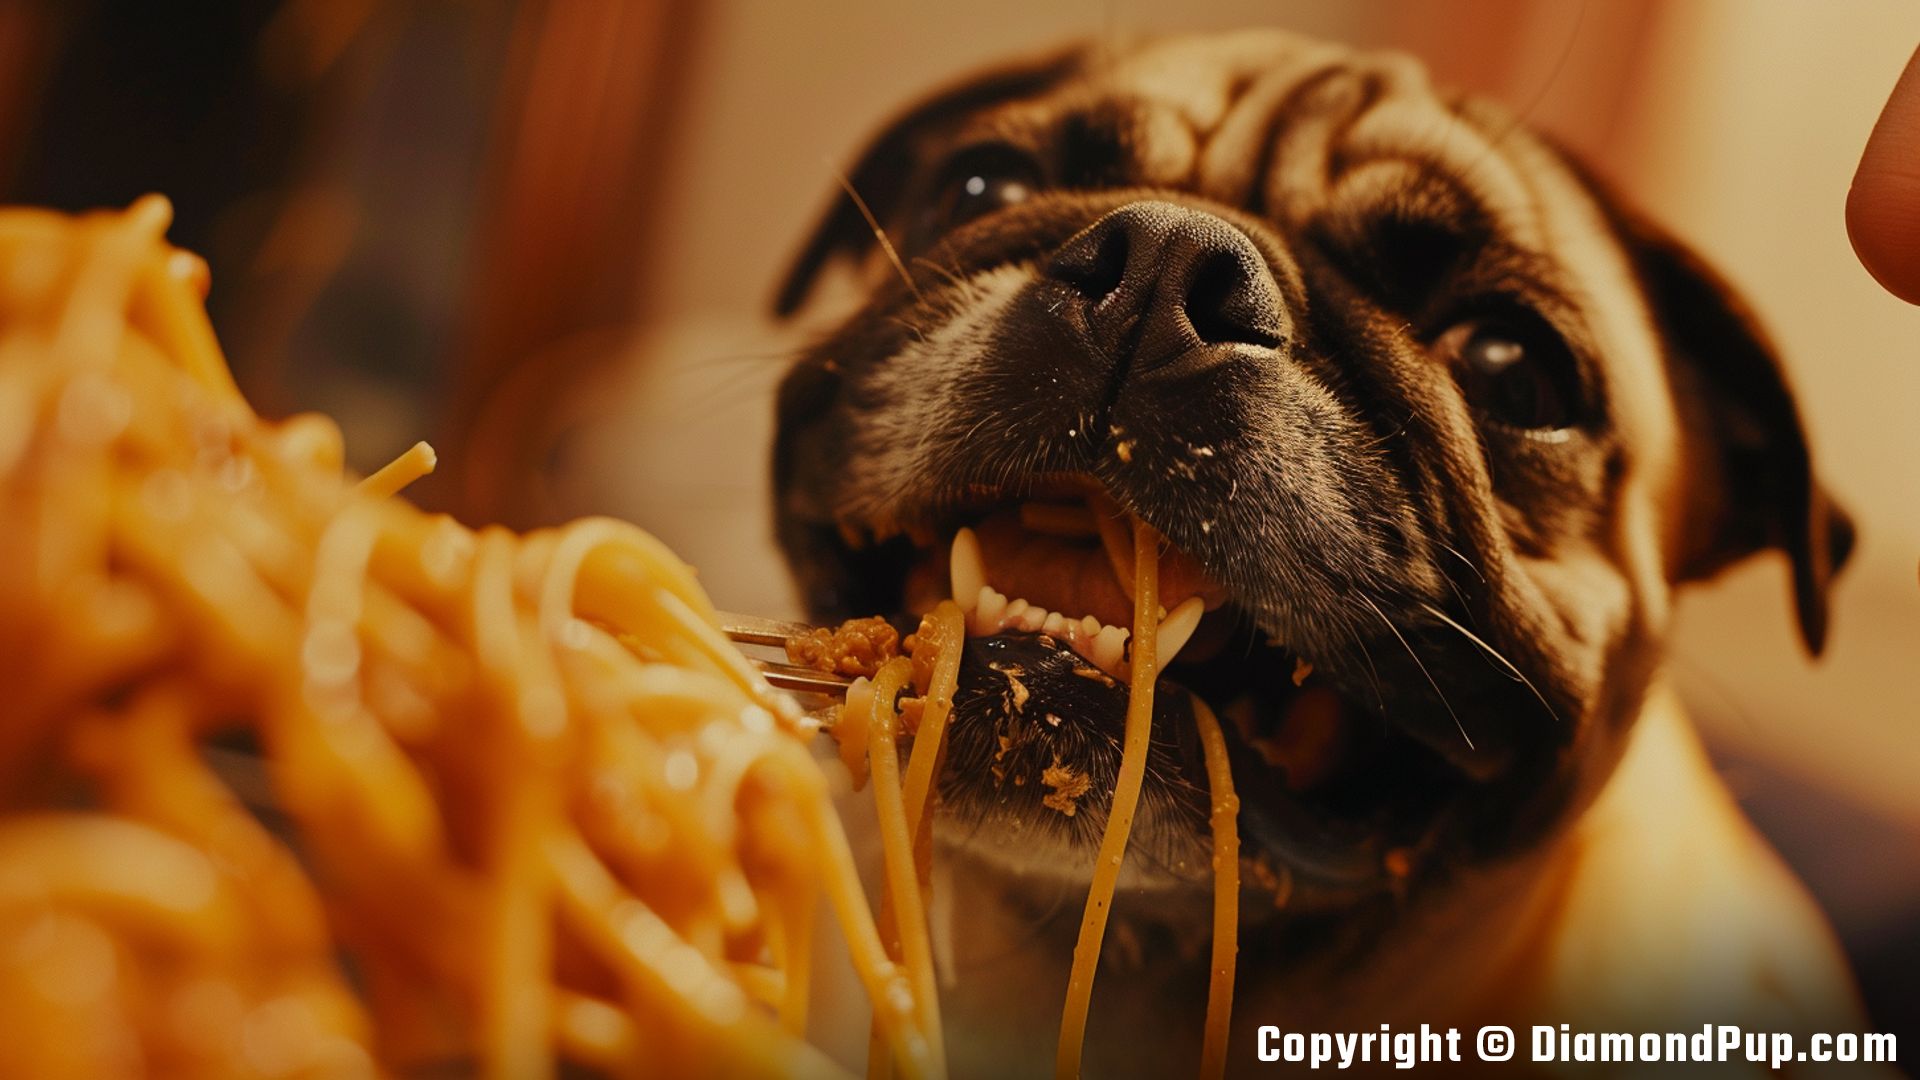 Photograph of an Adorable Pug Eating Pasta